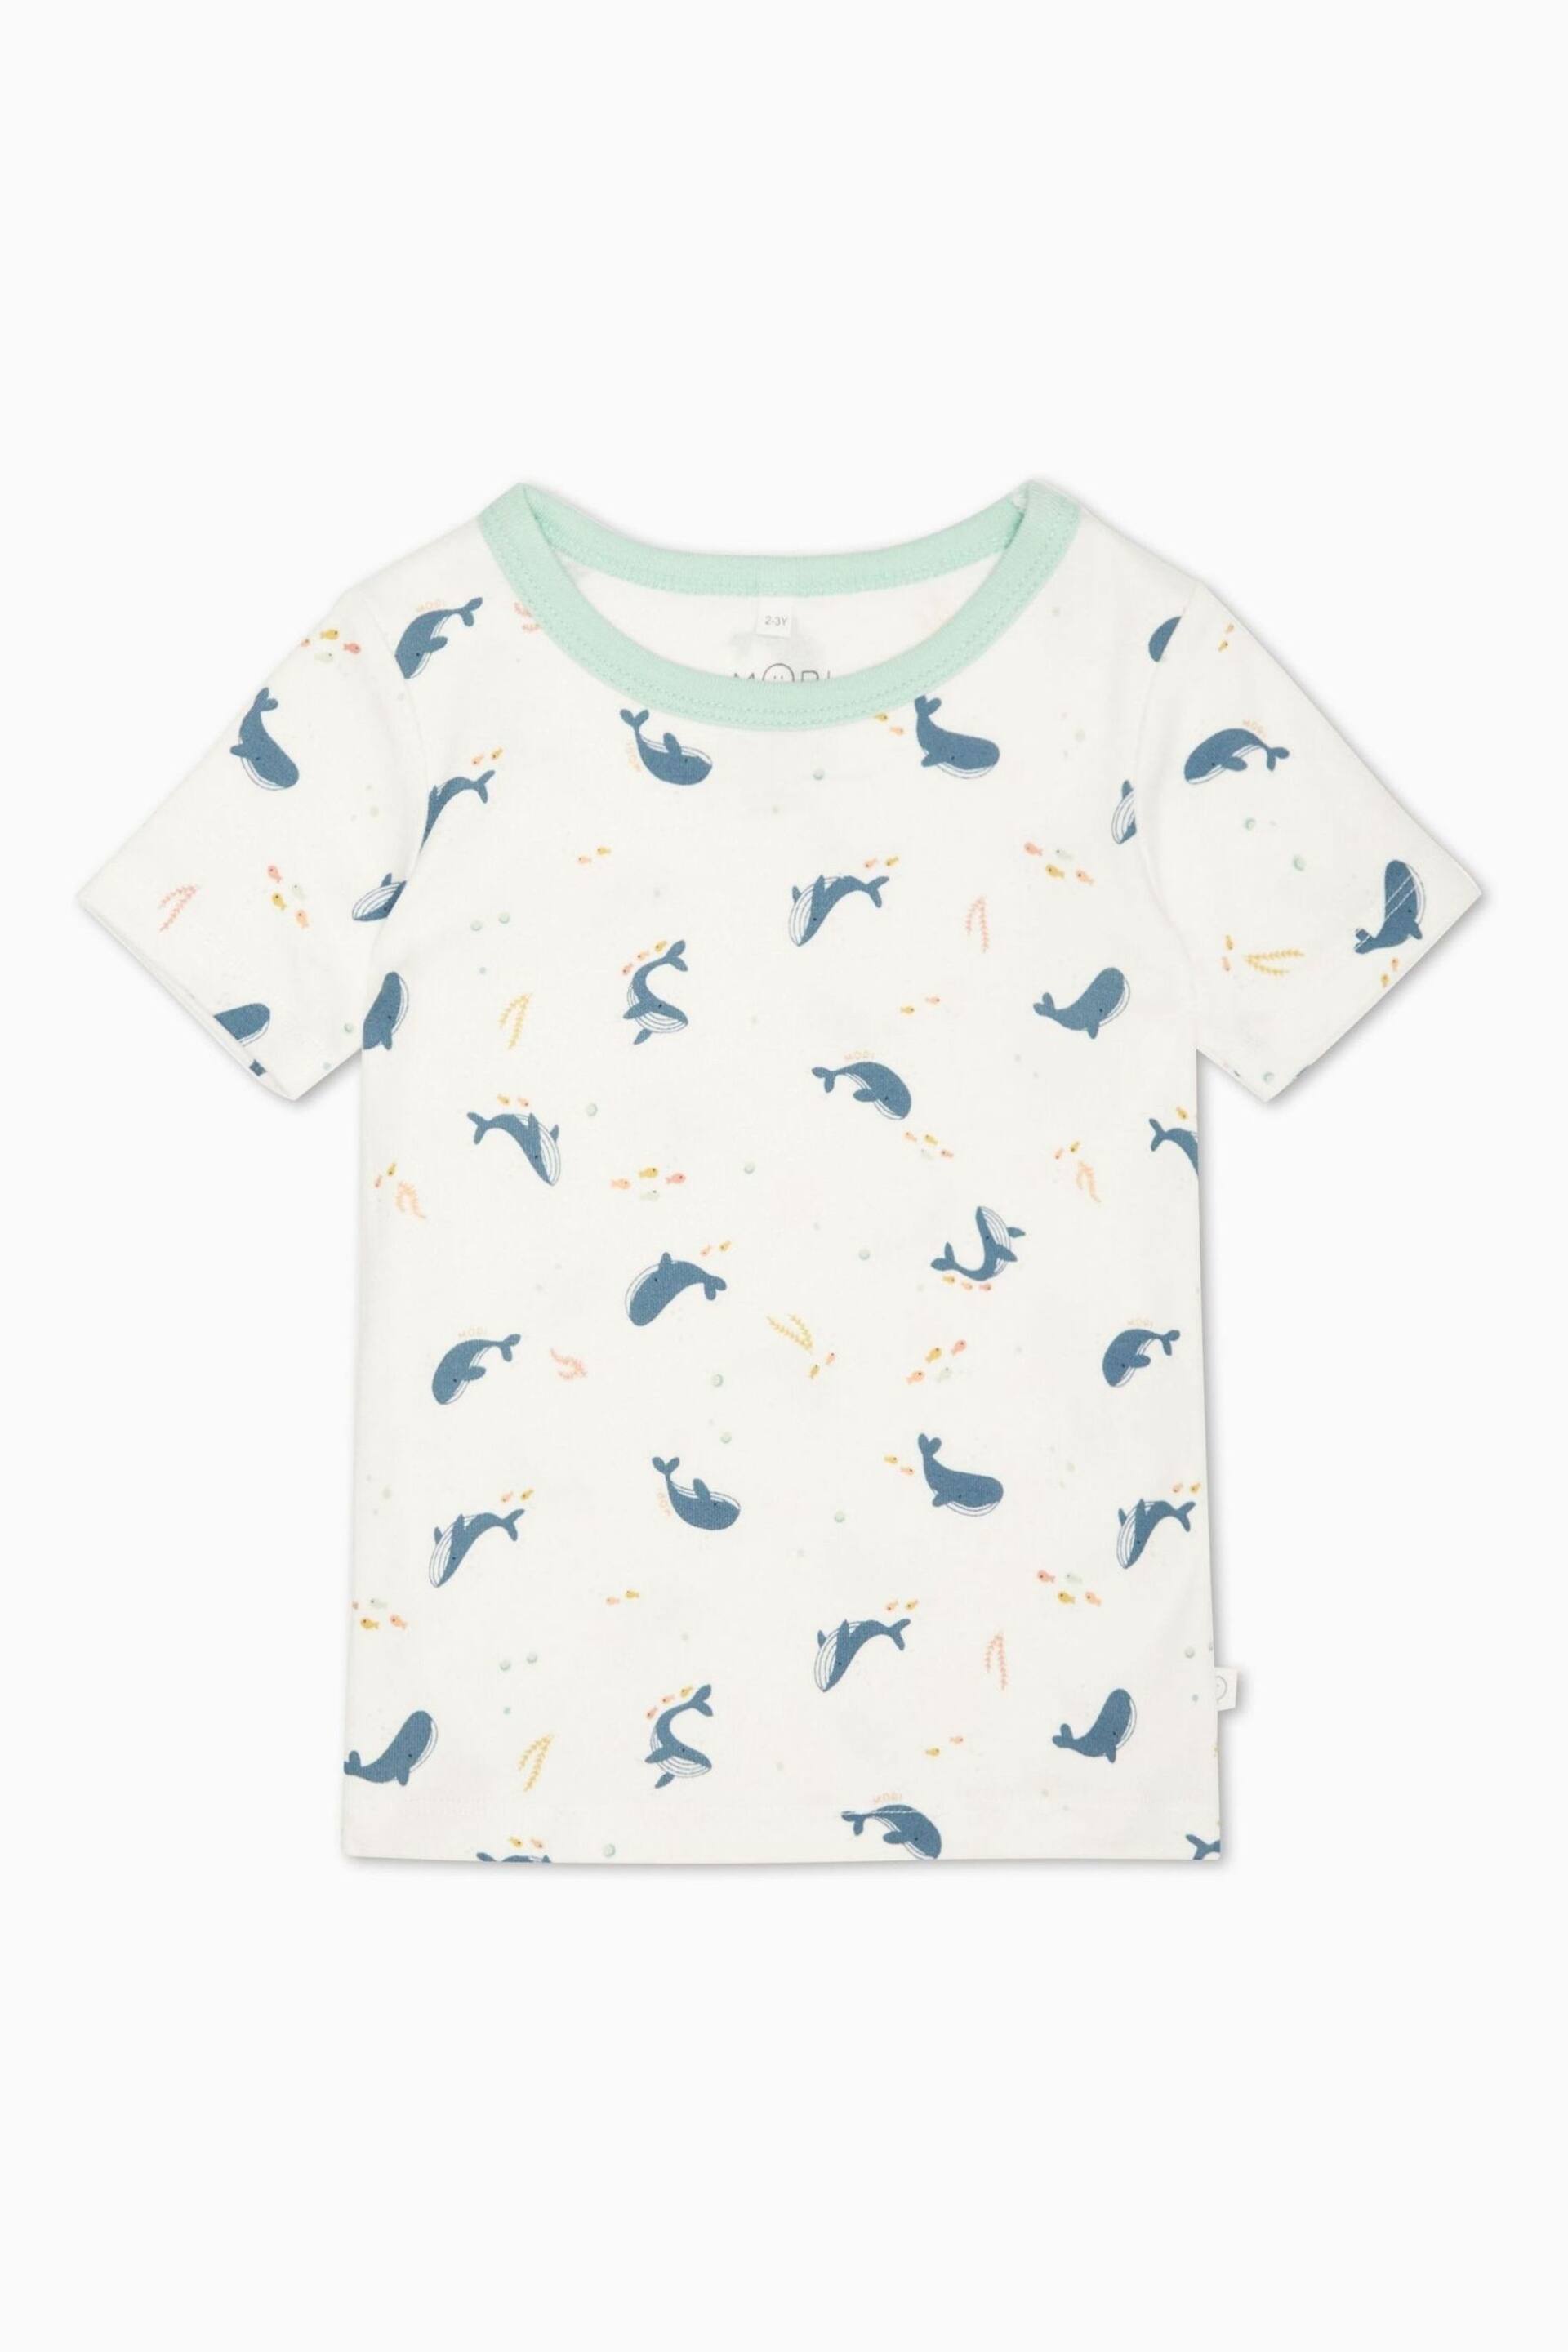 MORI Organic Cotton & Bamboo Whale White Print Short Pyjama Set - Image 3 of 4